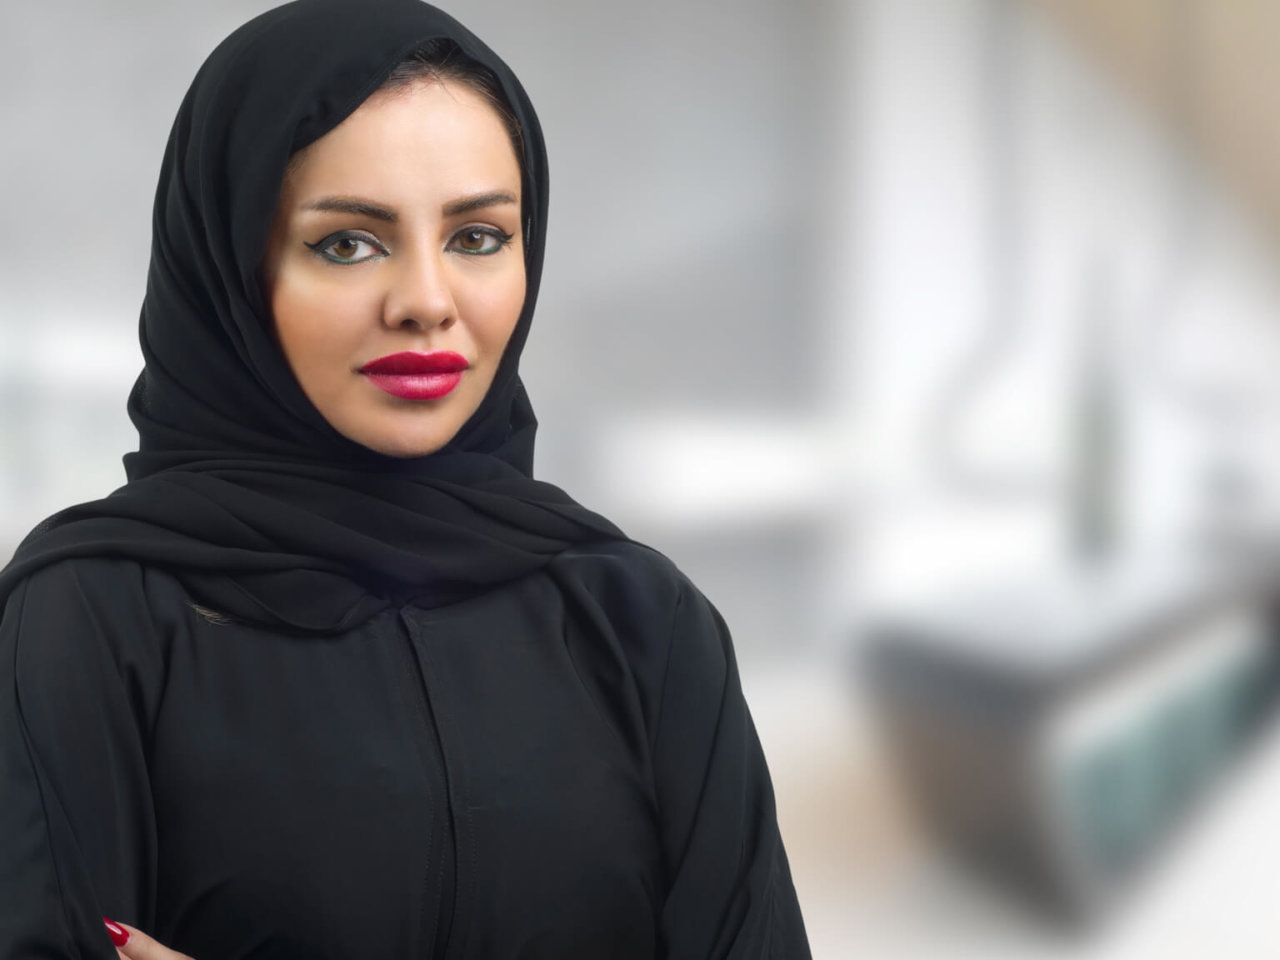 Woman wearing a black headscarf standing in an office